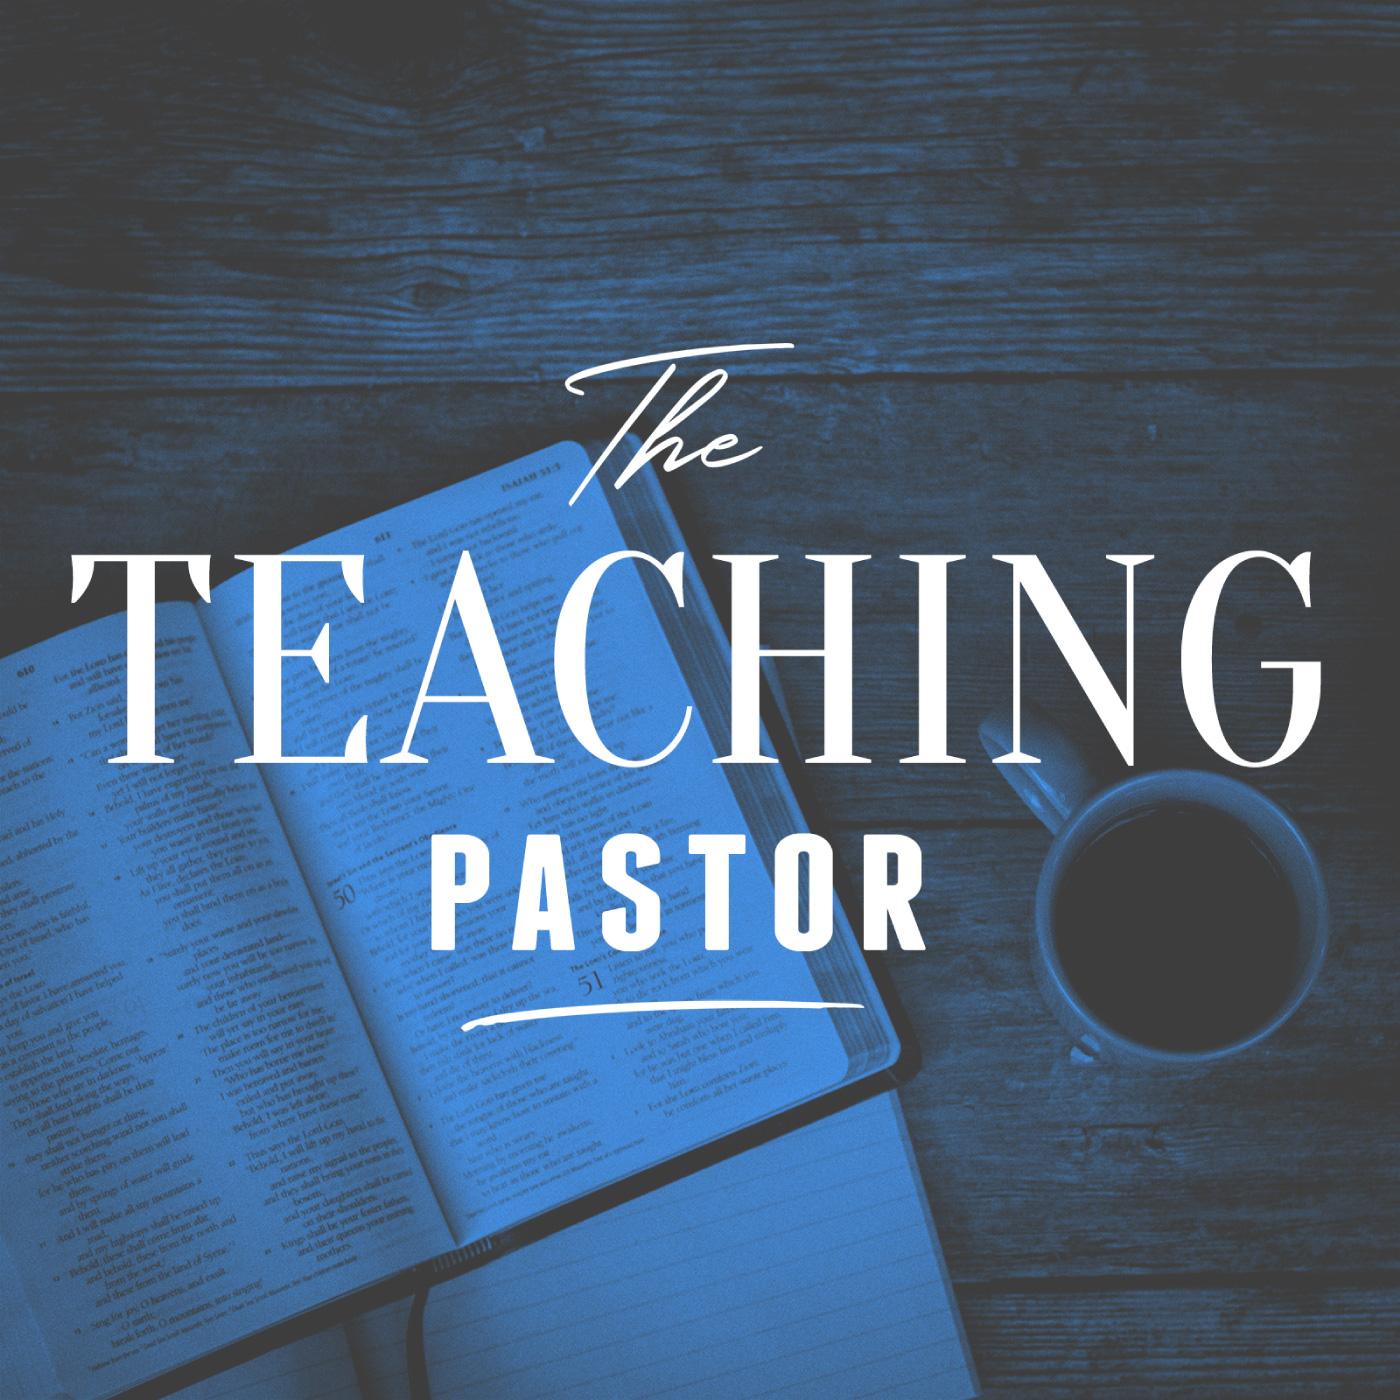 The Teaching Pastor